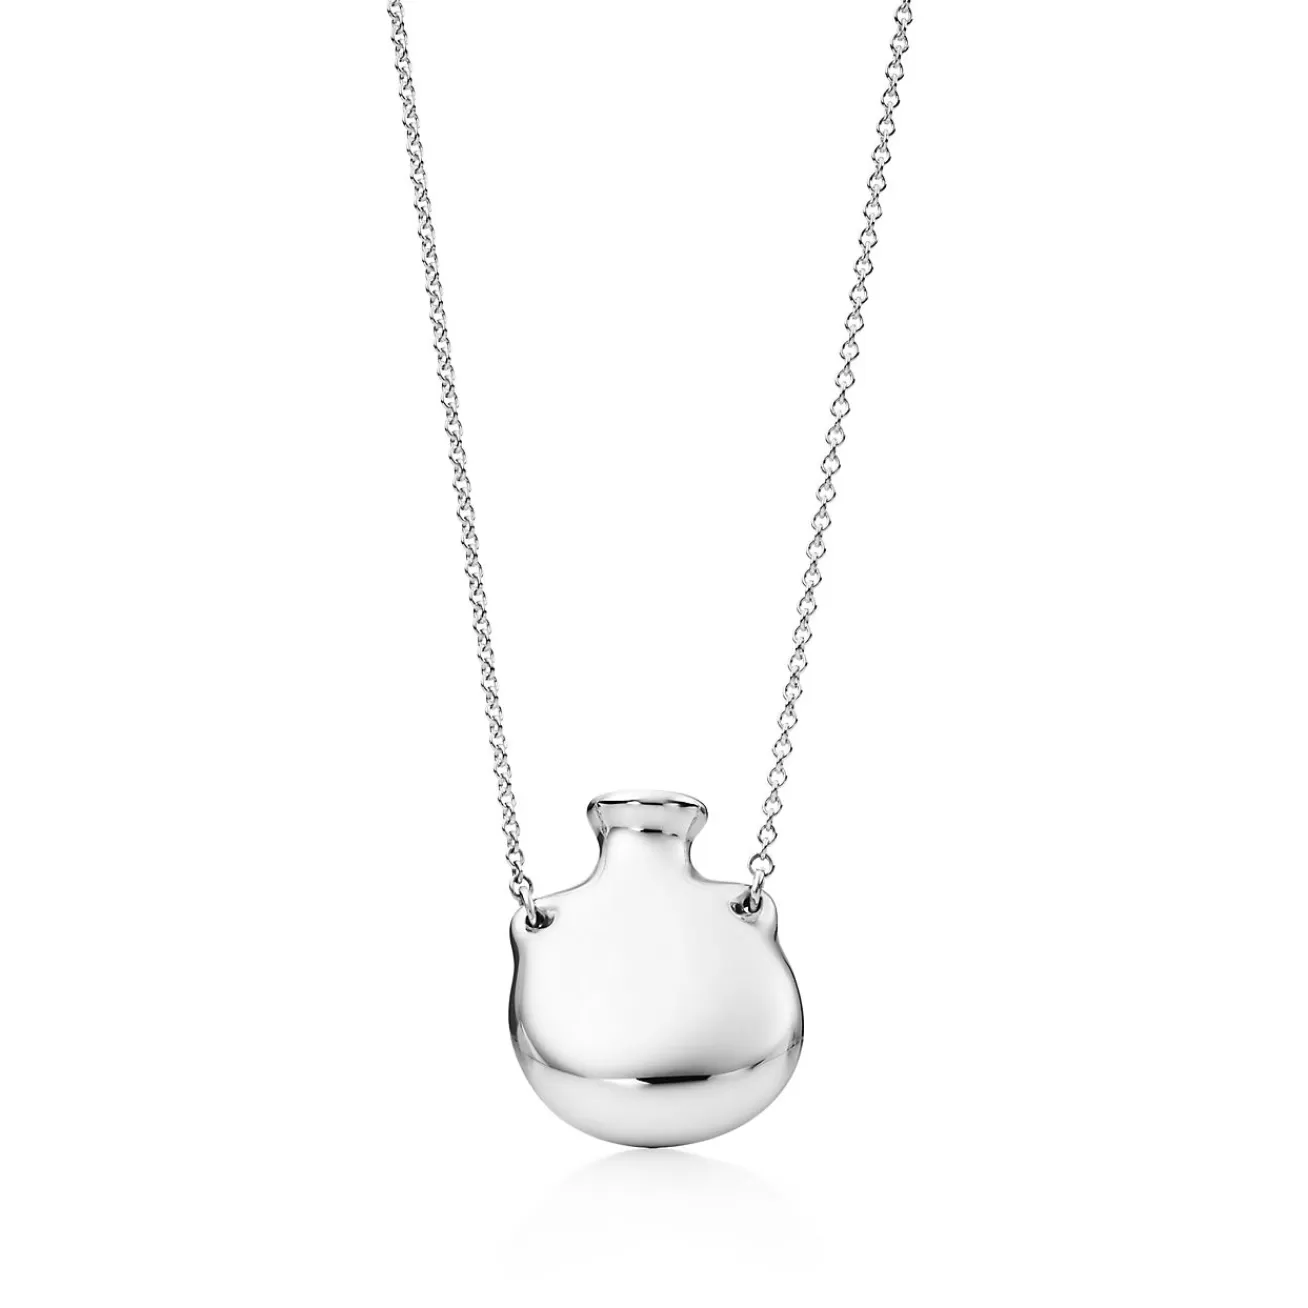 Tiffany & Co. Elsa Peretti® Bottle open bottle pendant in sterling silver, small. | ^ Necklaces & Pendants | Sterling Silver Jewelry